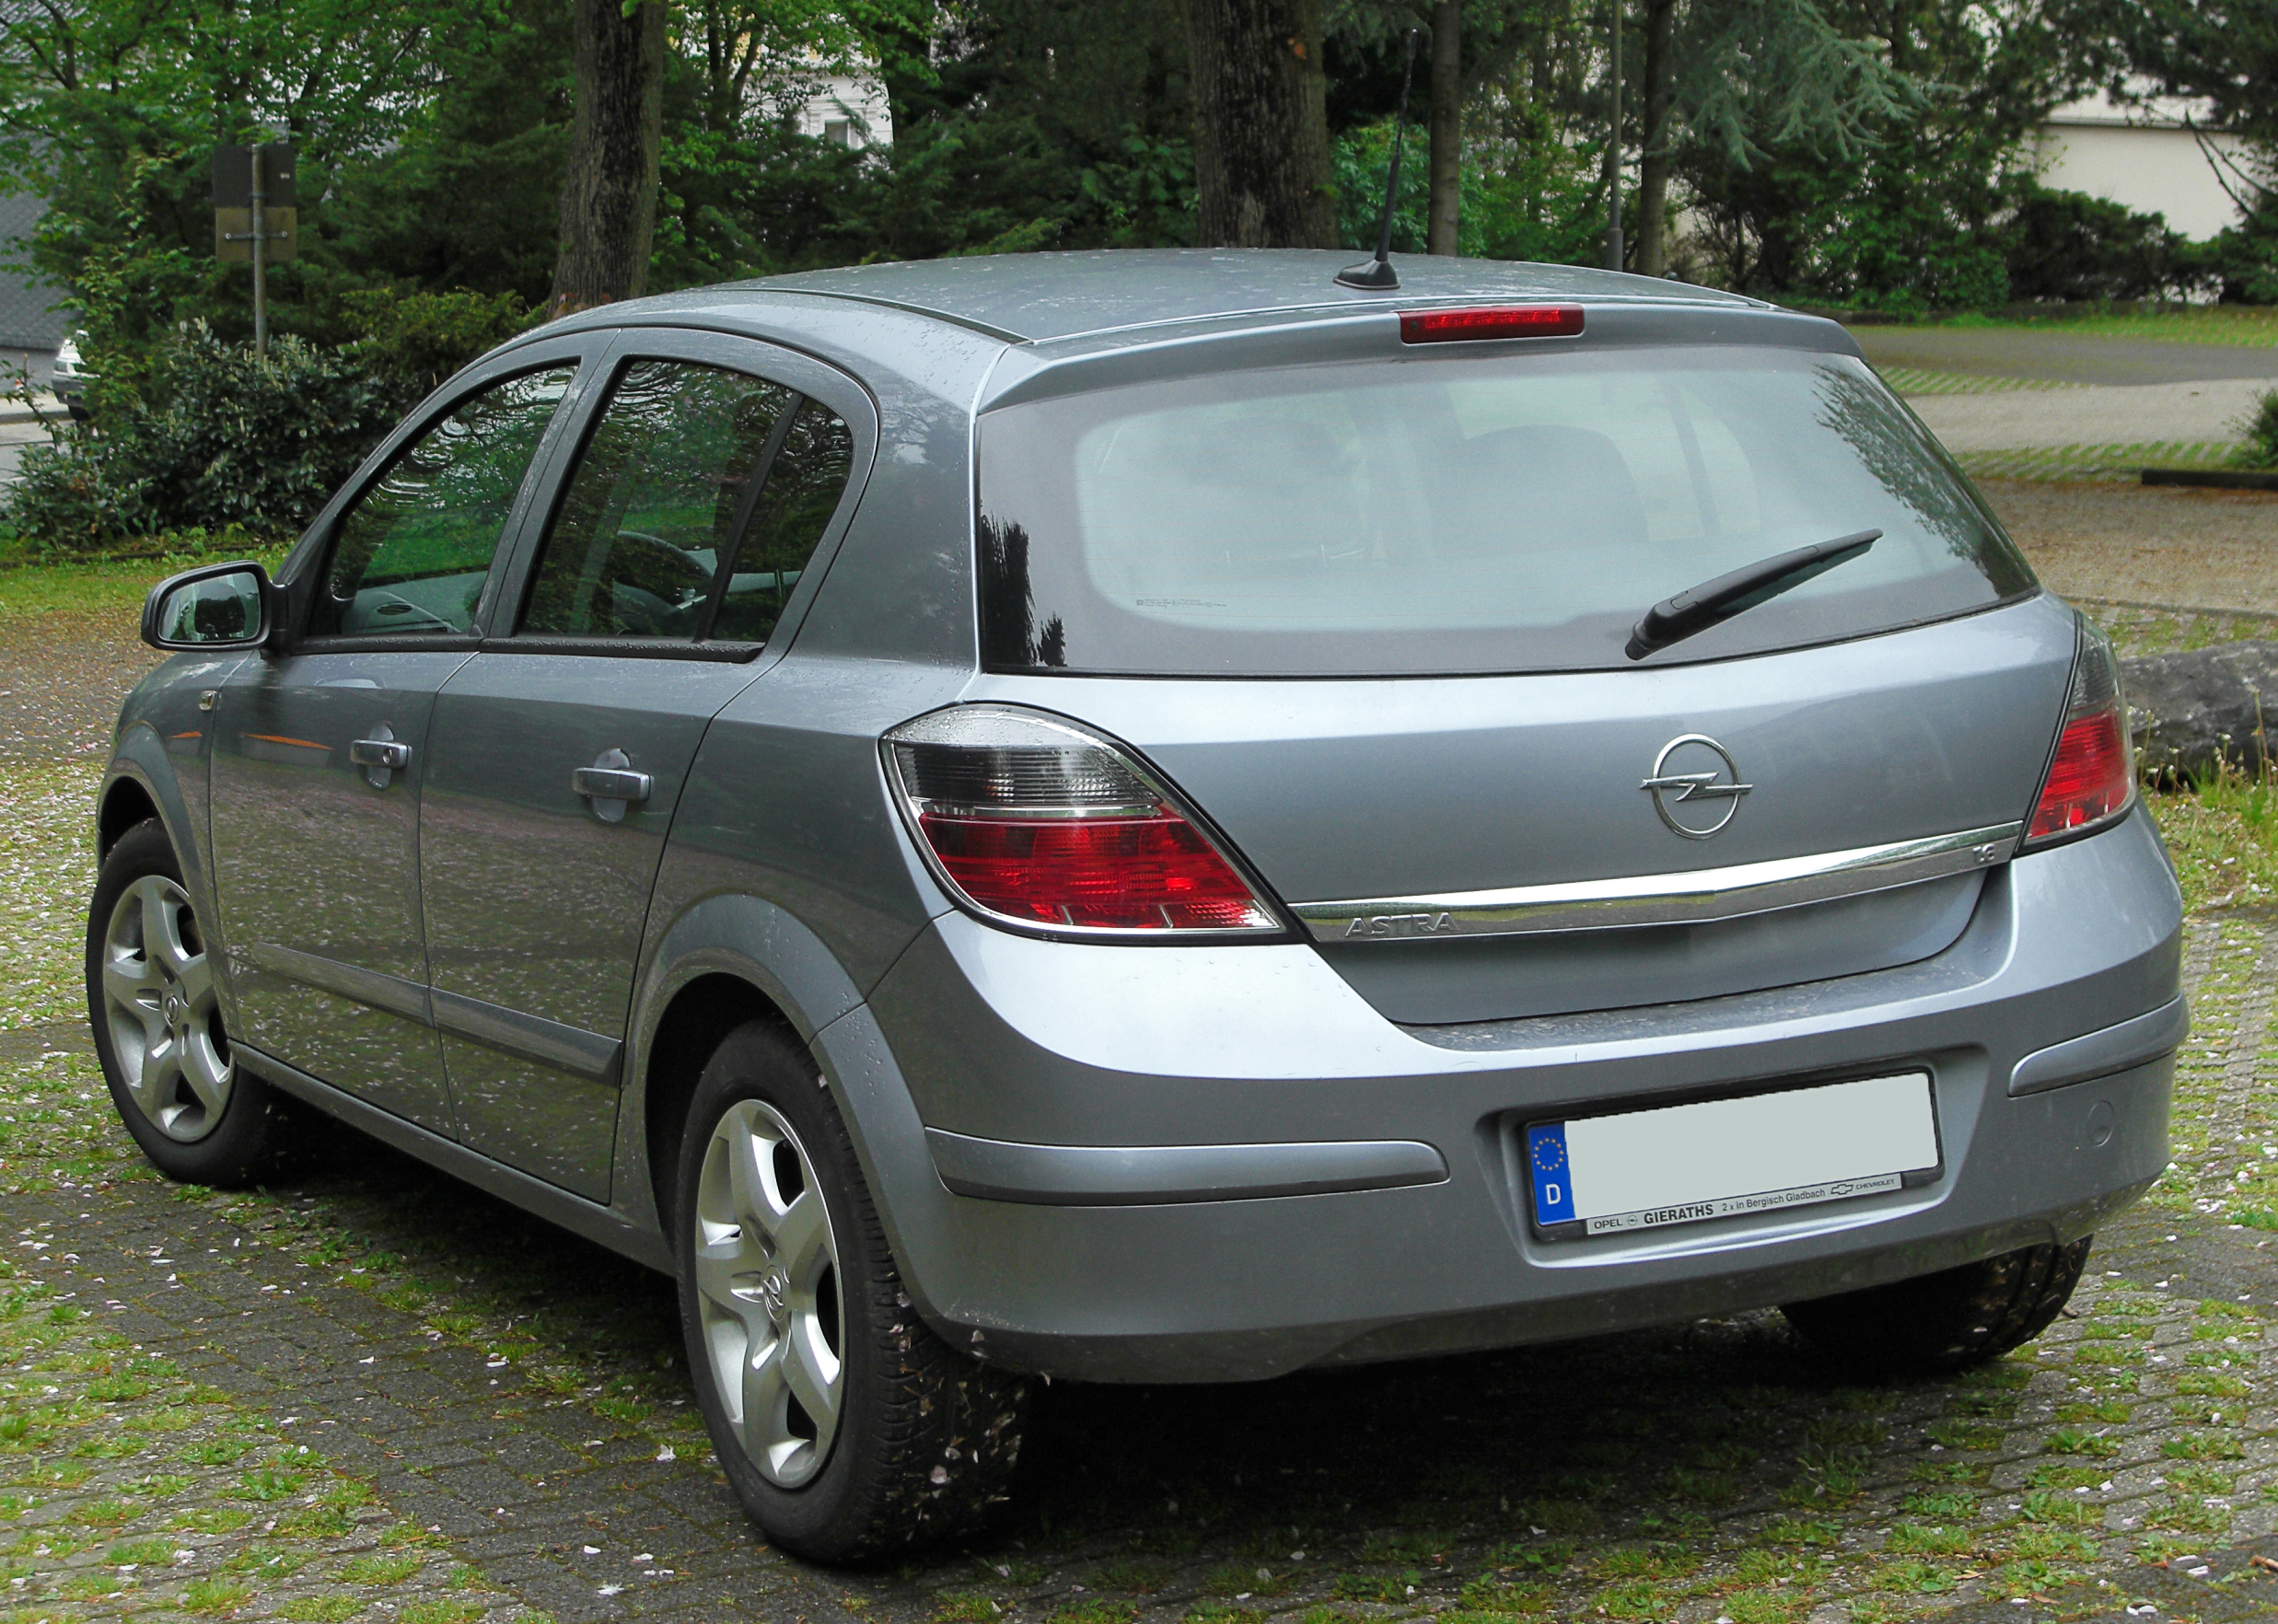 File:Opel Astra H 1.6 Facelift rear 20100513.jpg - Wikimedia Commons